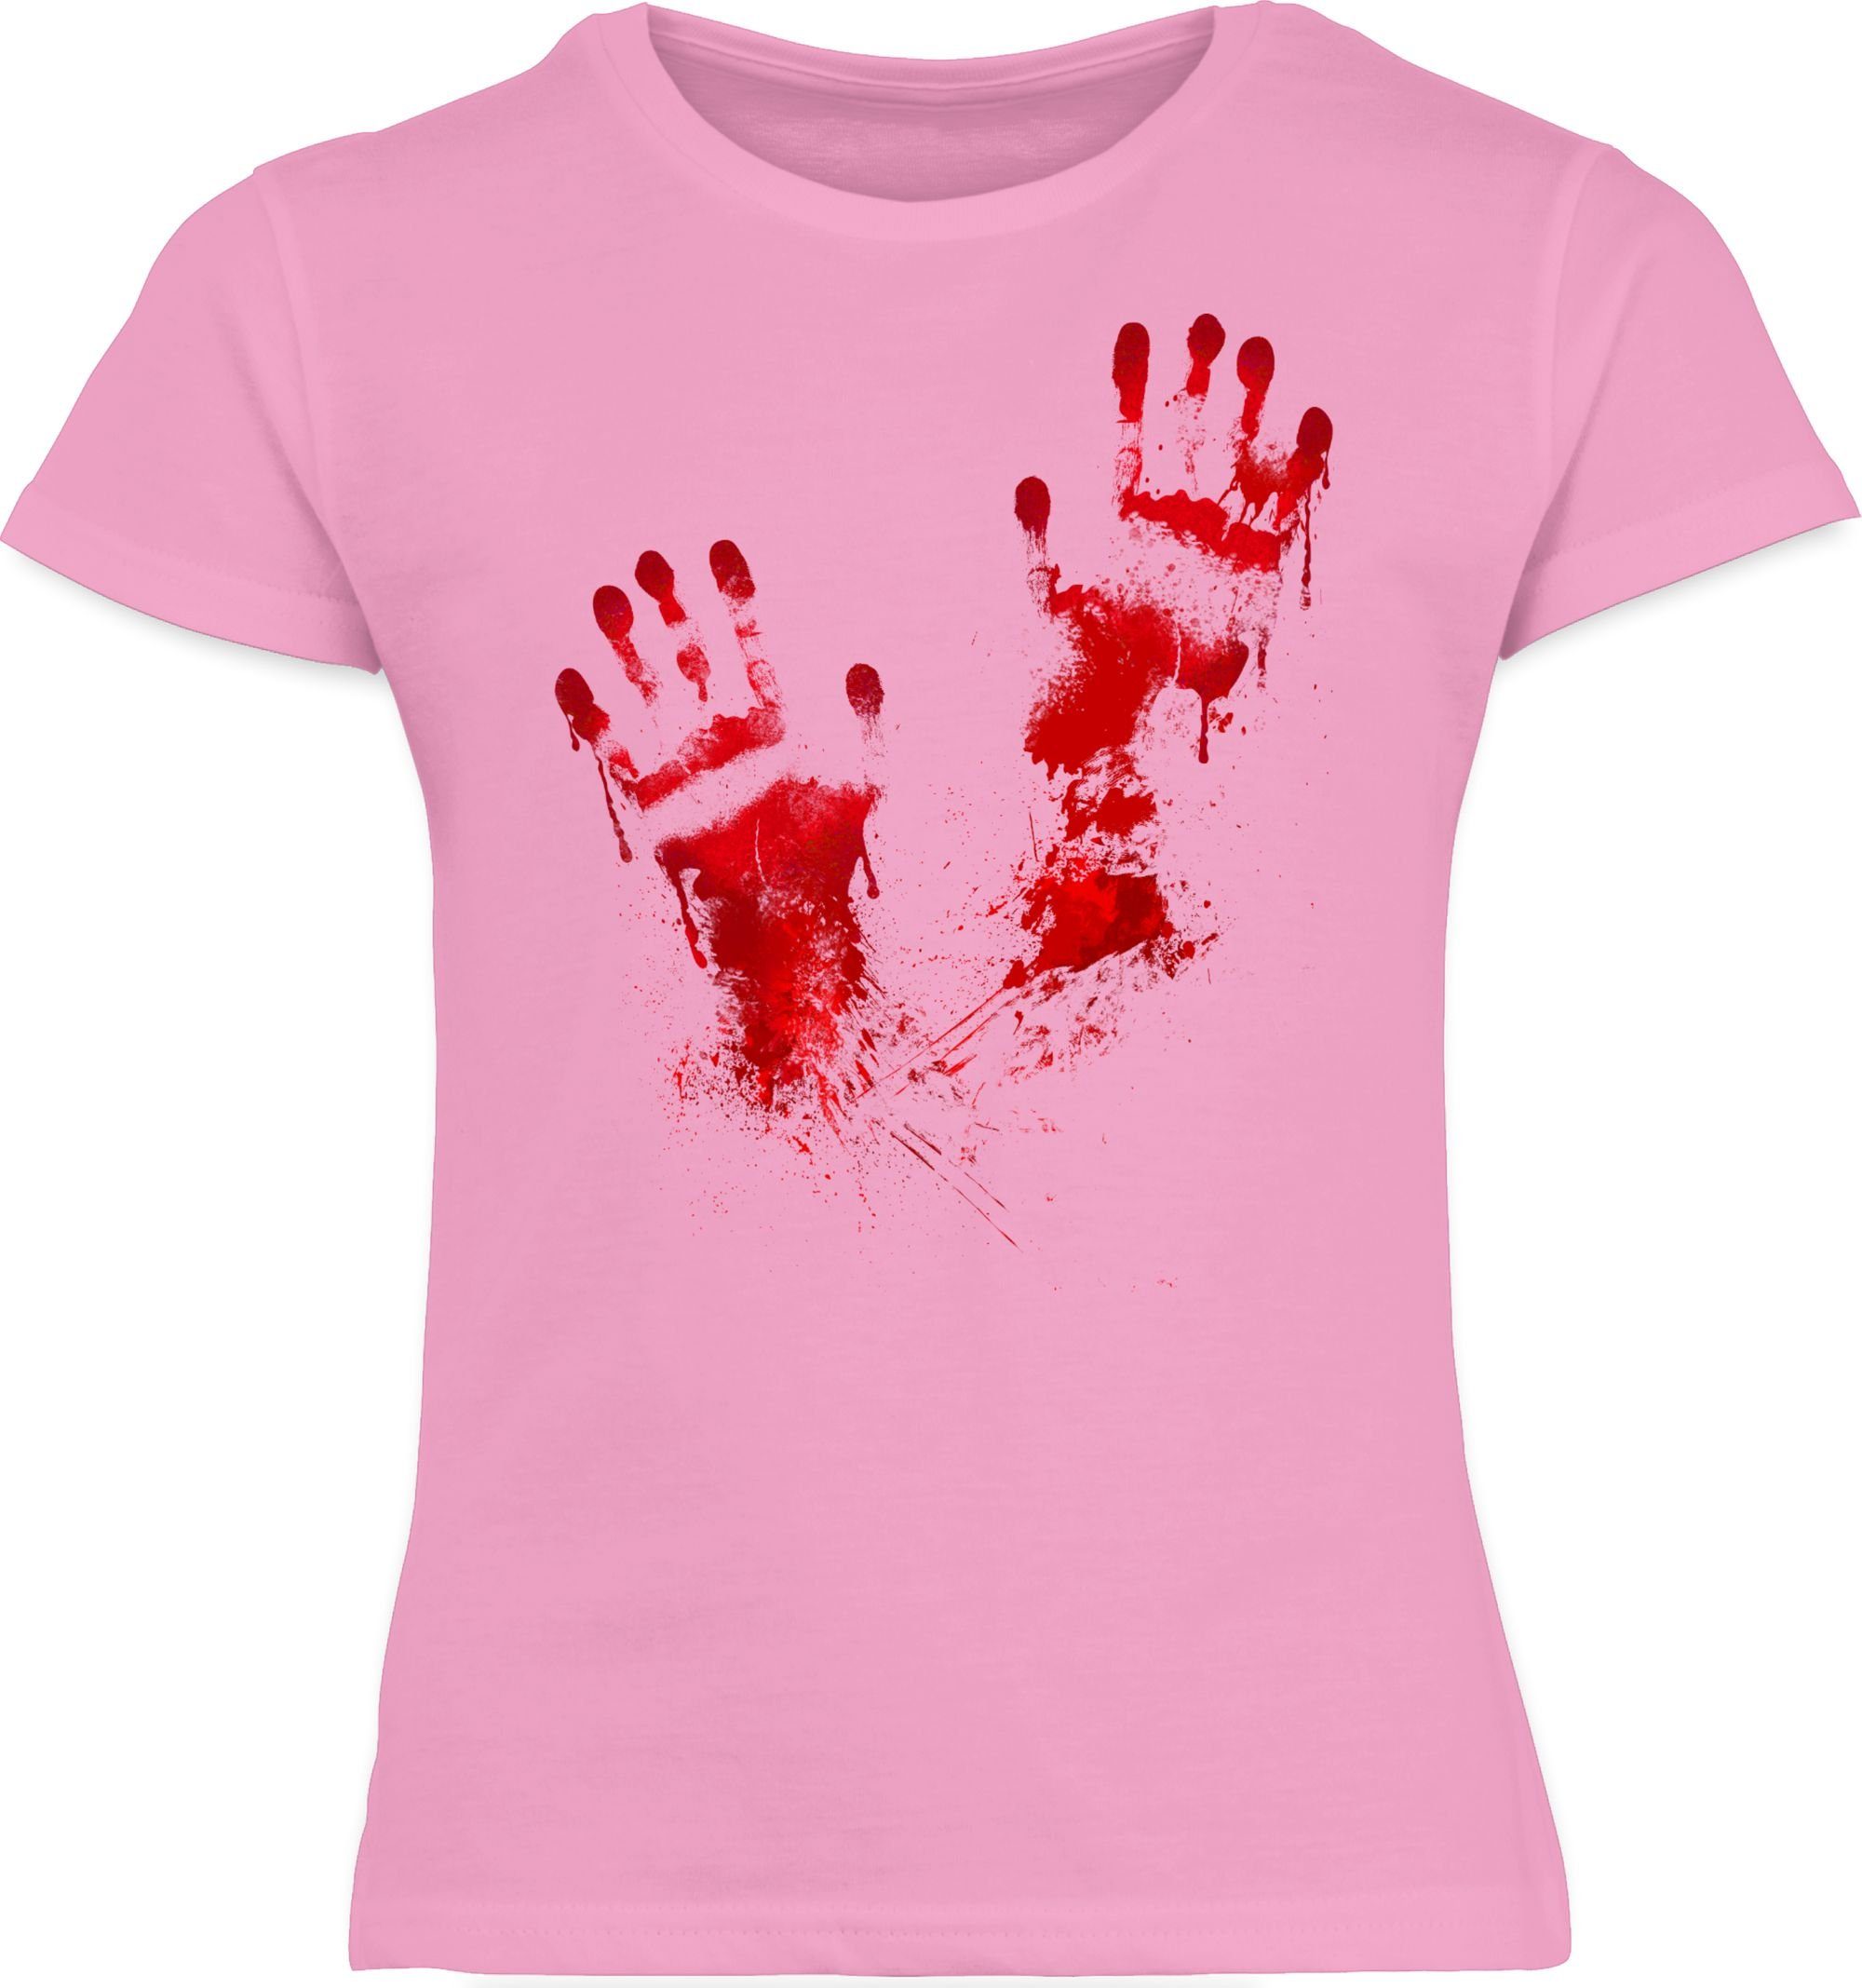 Shirtracer T-Shirt Blutige Gruselig Blut Rosa Handabdruck Halloween 2 Handabdrücke für Kinder Kostüme